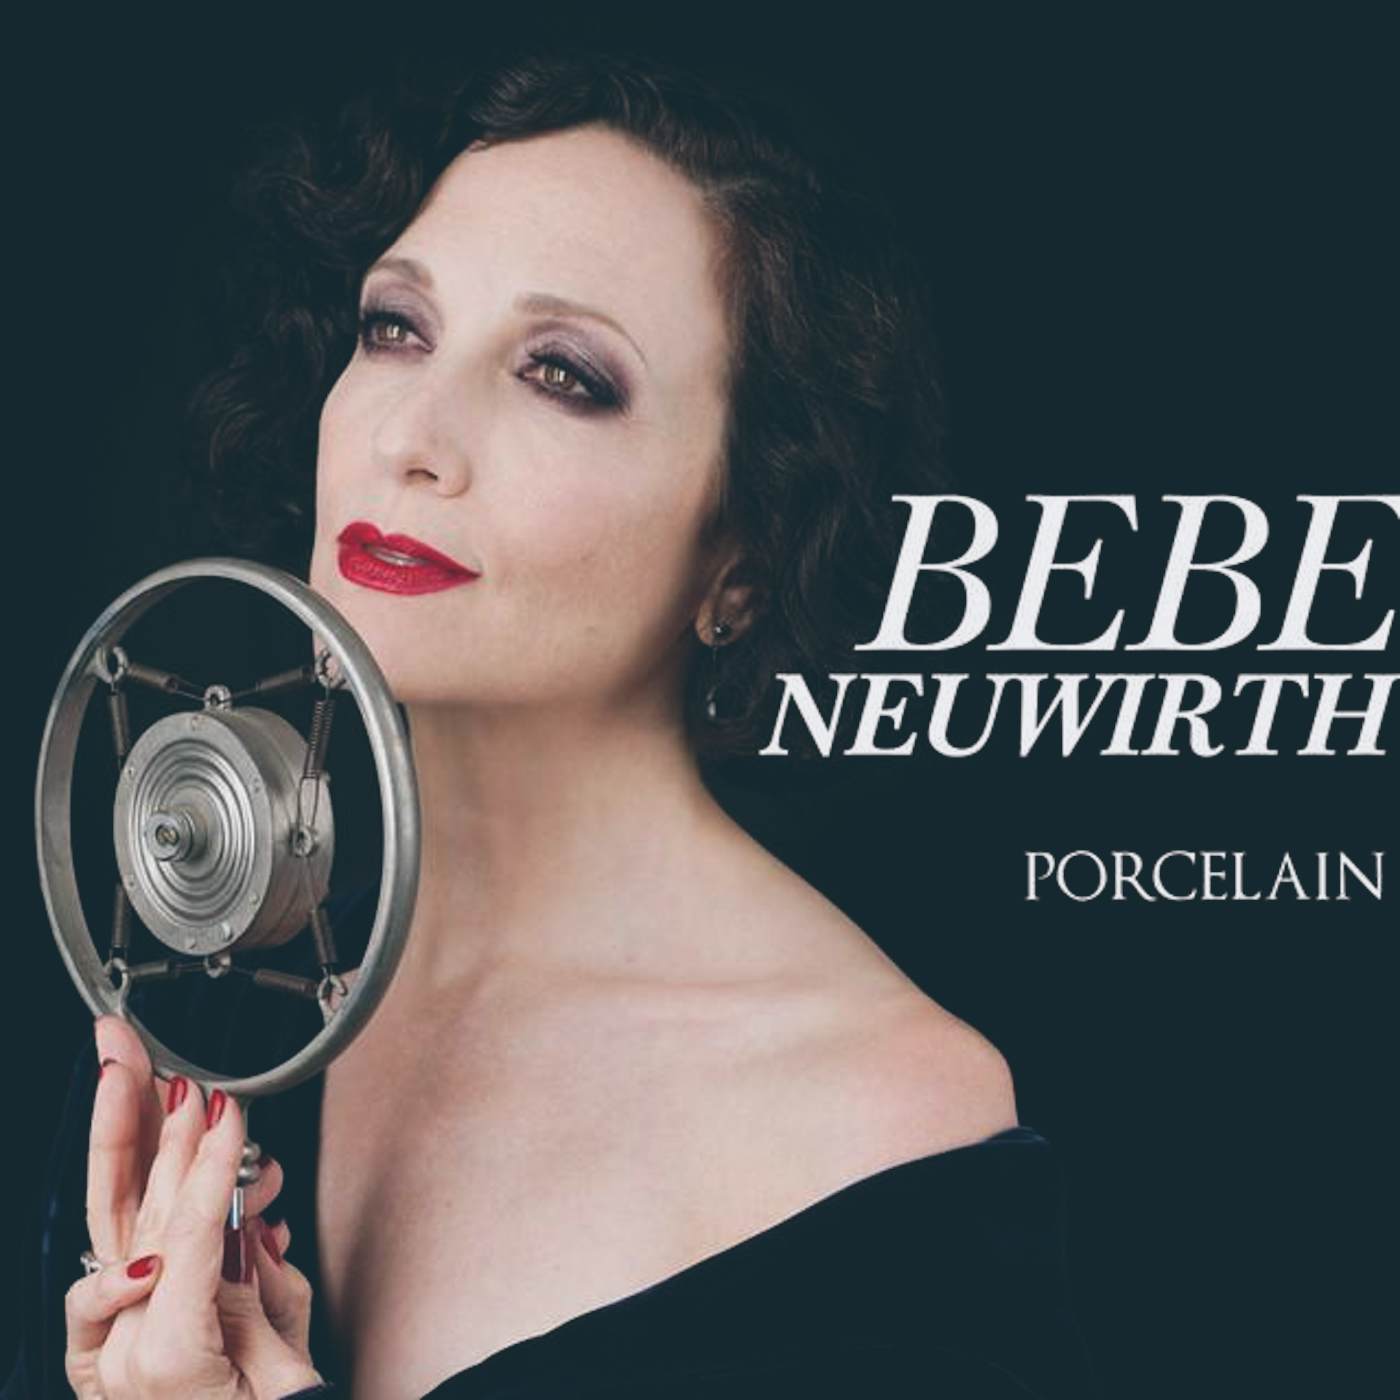 Bebe Neuwirth Store: Official Merch & Vinyl